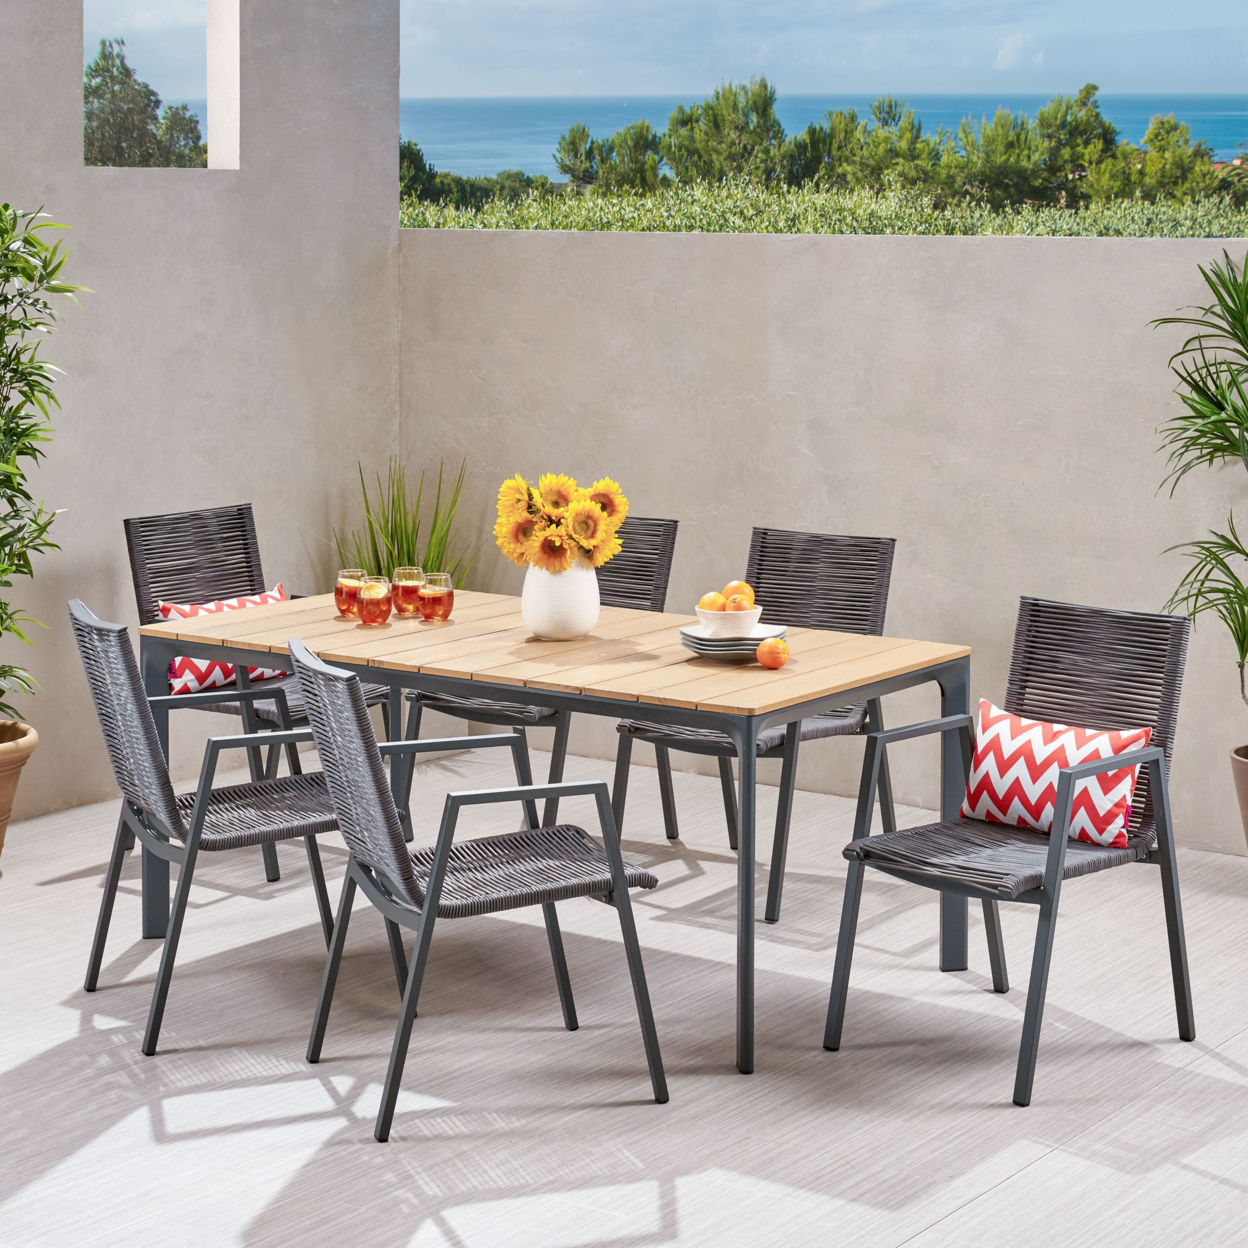 Linda Outdoor Modern 6 Seater Aluminum Dining Set With Eucalyptus Table Top